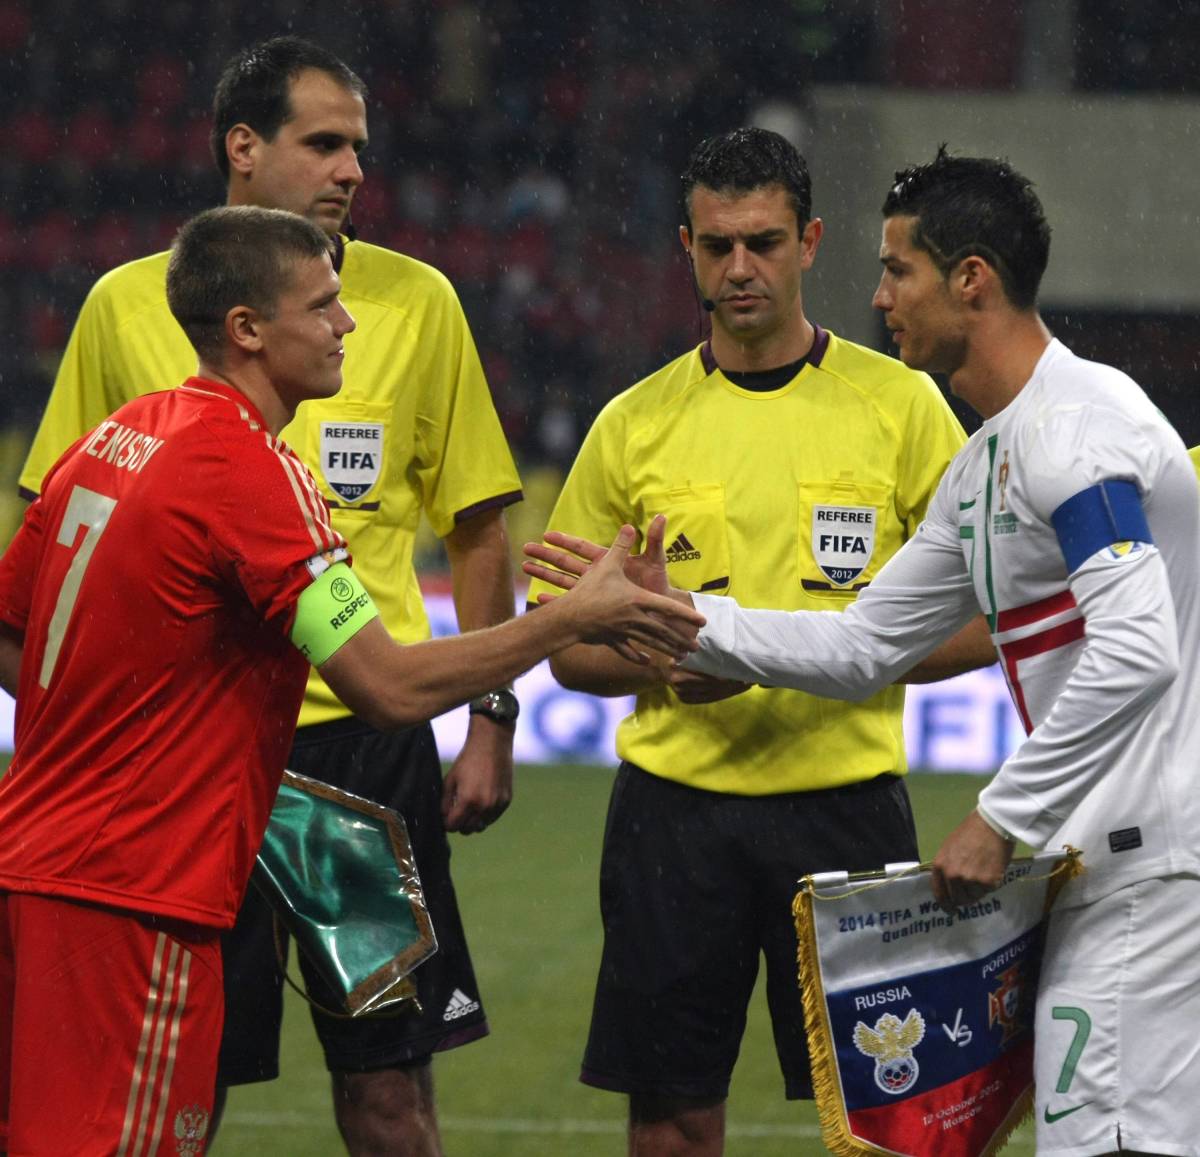 Russia captain Igor Denisov (left) pictured shaking hands with Portugal skipper Cristiano Ronaldo before a game in 2012